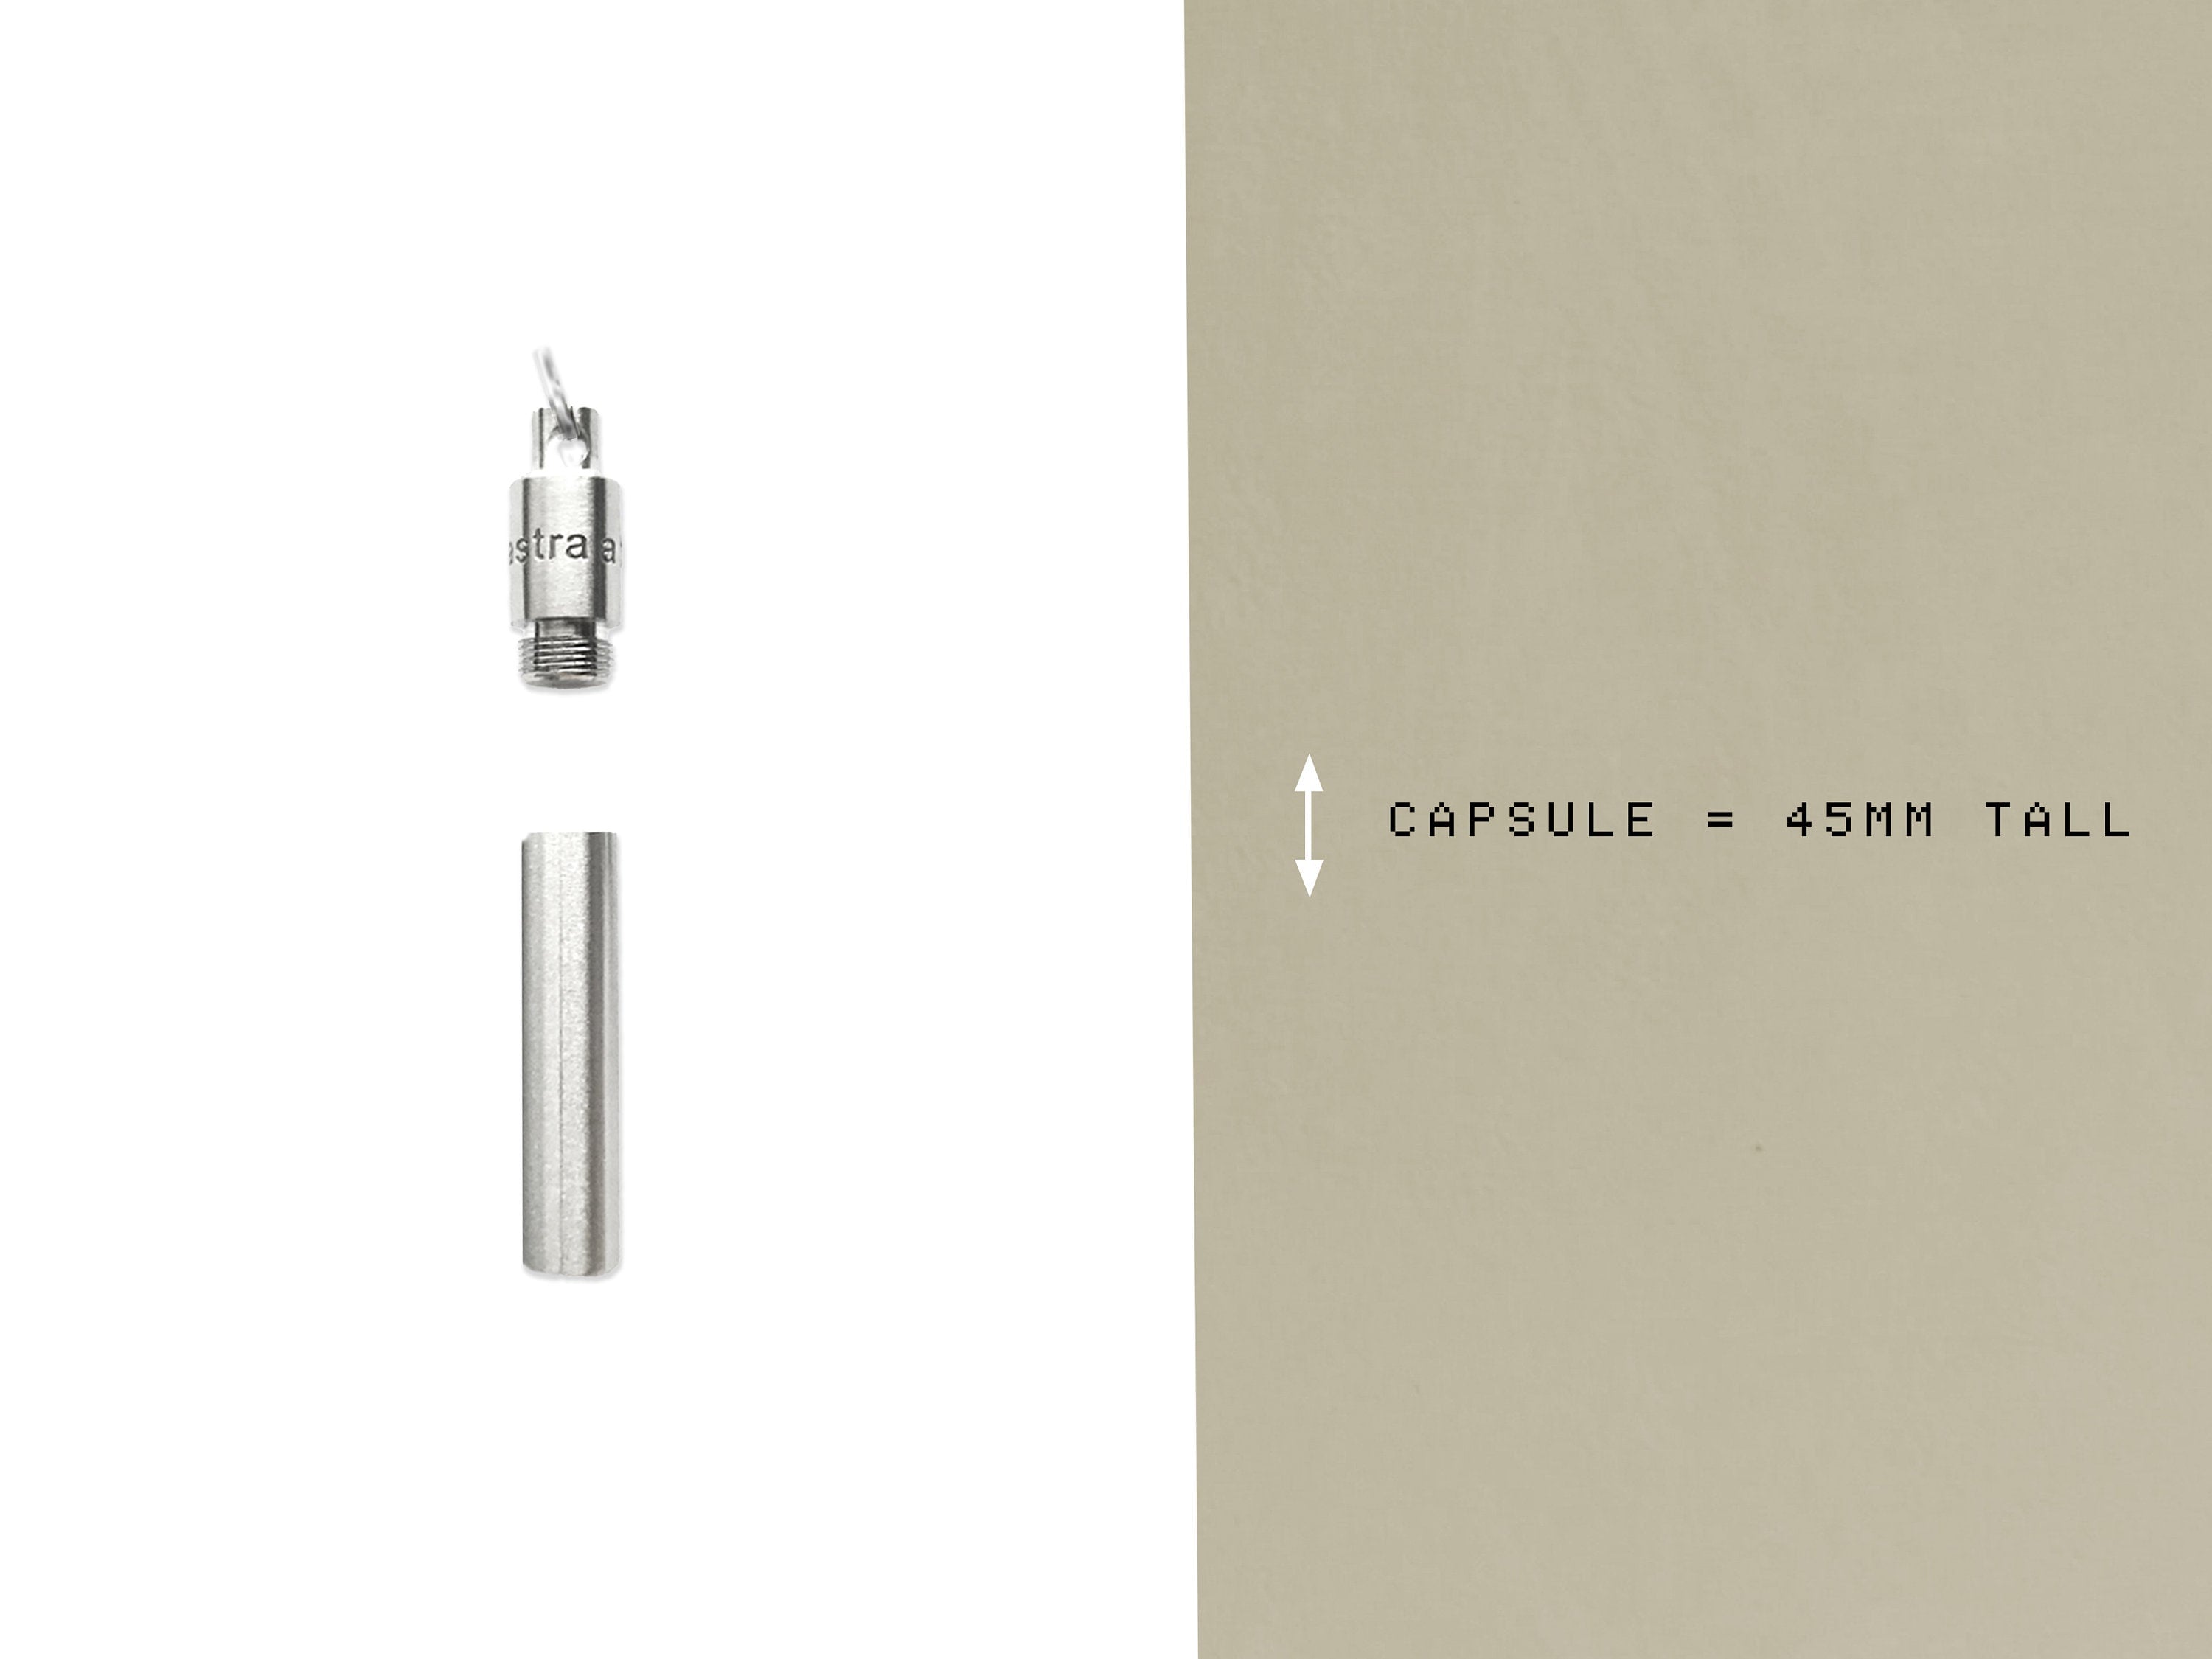 Meteorite Fragment Time Capsule - Men's Stainless Steel Space Keychain / Gift - EDC Carabiner